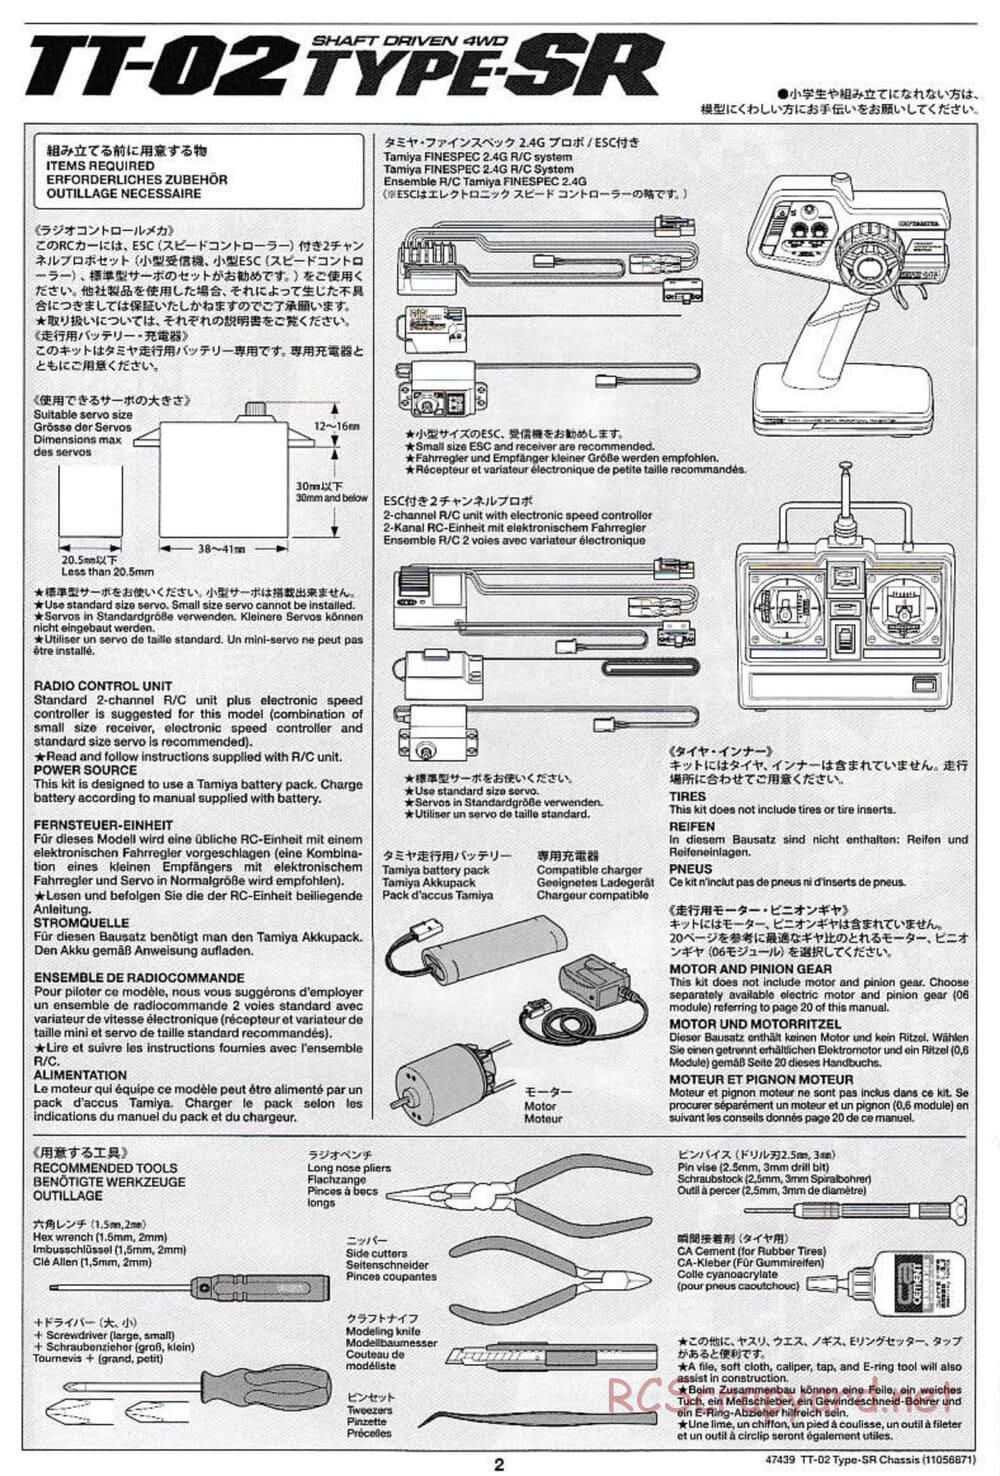 Tamiya - TT-02 Type-SR Chassis - Manual - Page 2